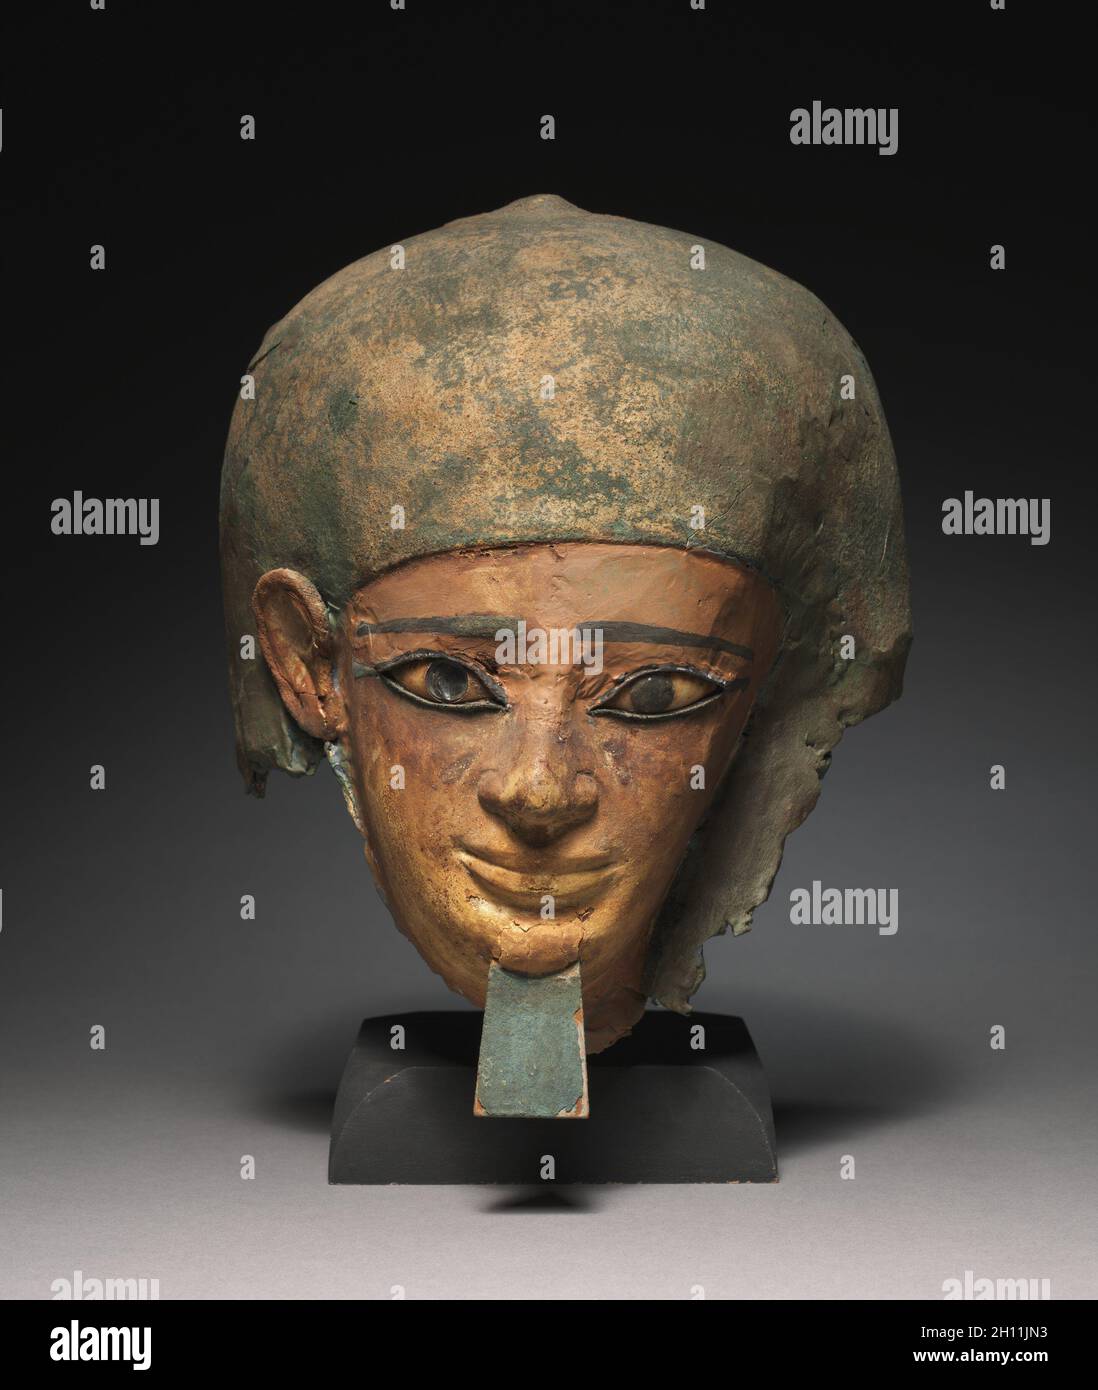 Mummy Mask of Senbi, 1980-1801 BC. Egypt, Meir, Middle Kingdom, Dynasty 12, 1980-1801 BC. Cartonage, wood, limestone, obsidian, paint; overall: 30.5 x 29.2 x 27.6 cm (12 x 11 1/2 x 10 7/8 in.). Stock Photo